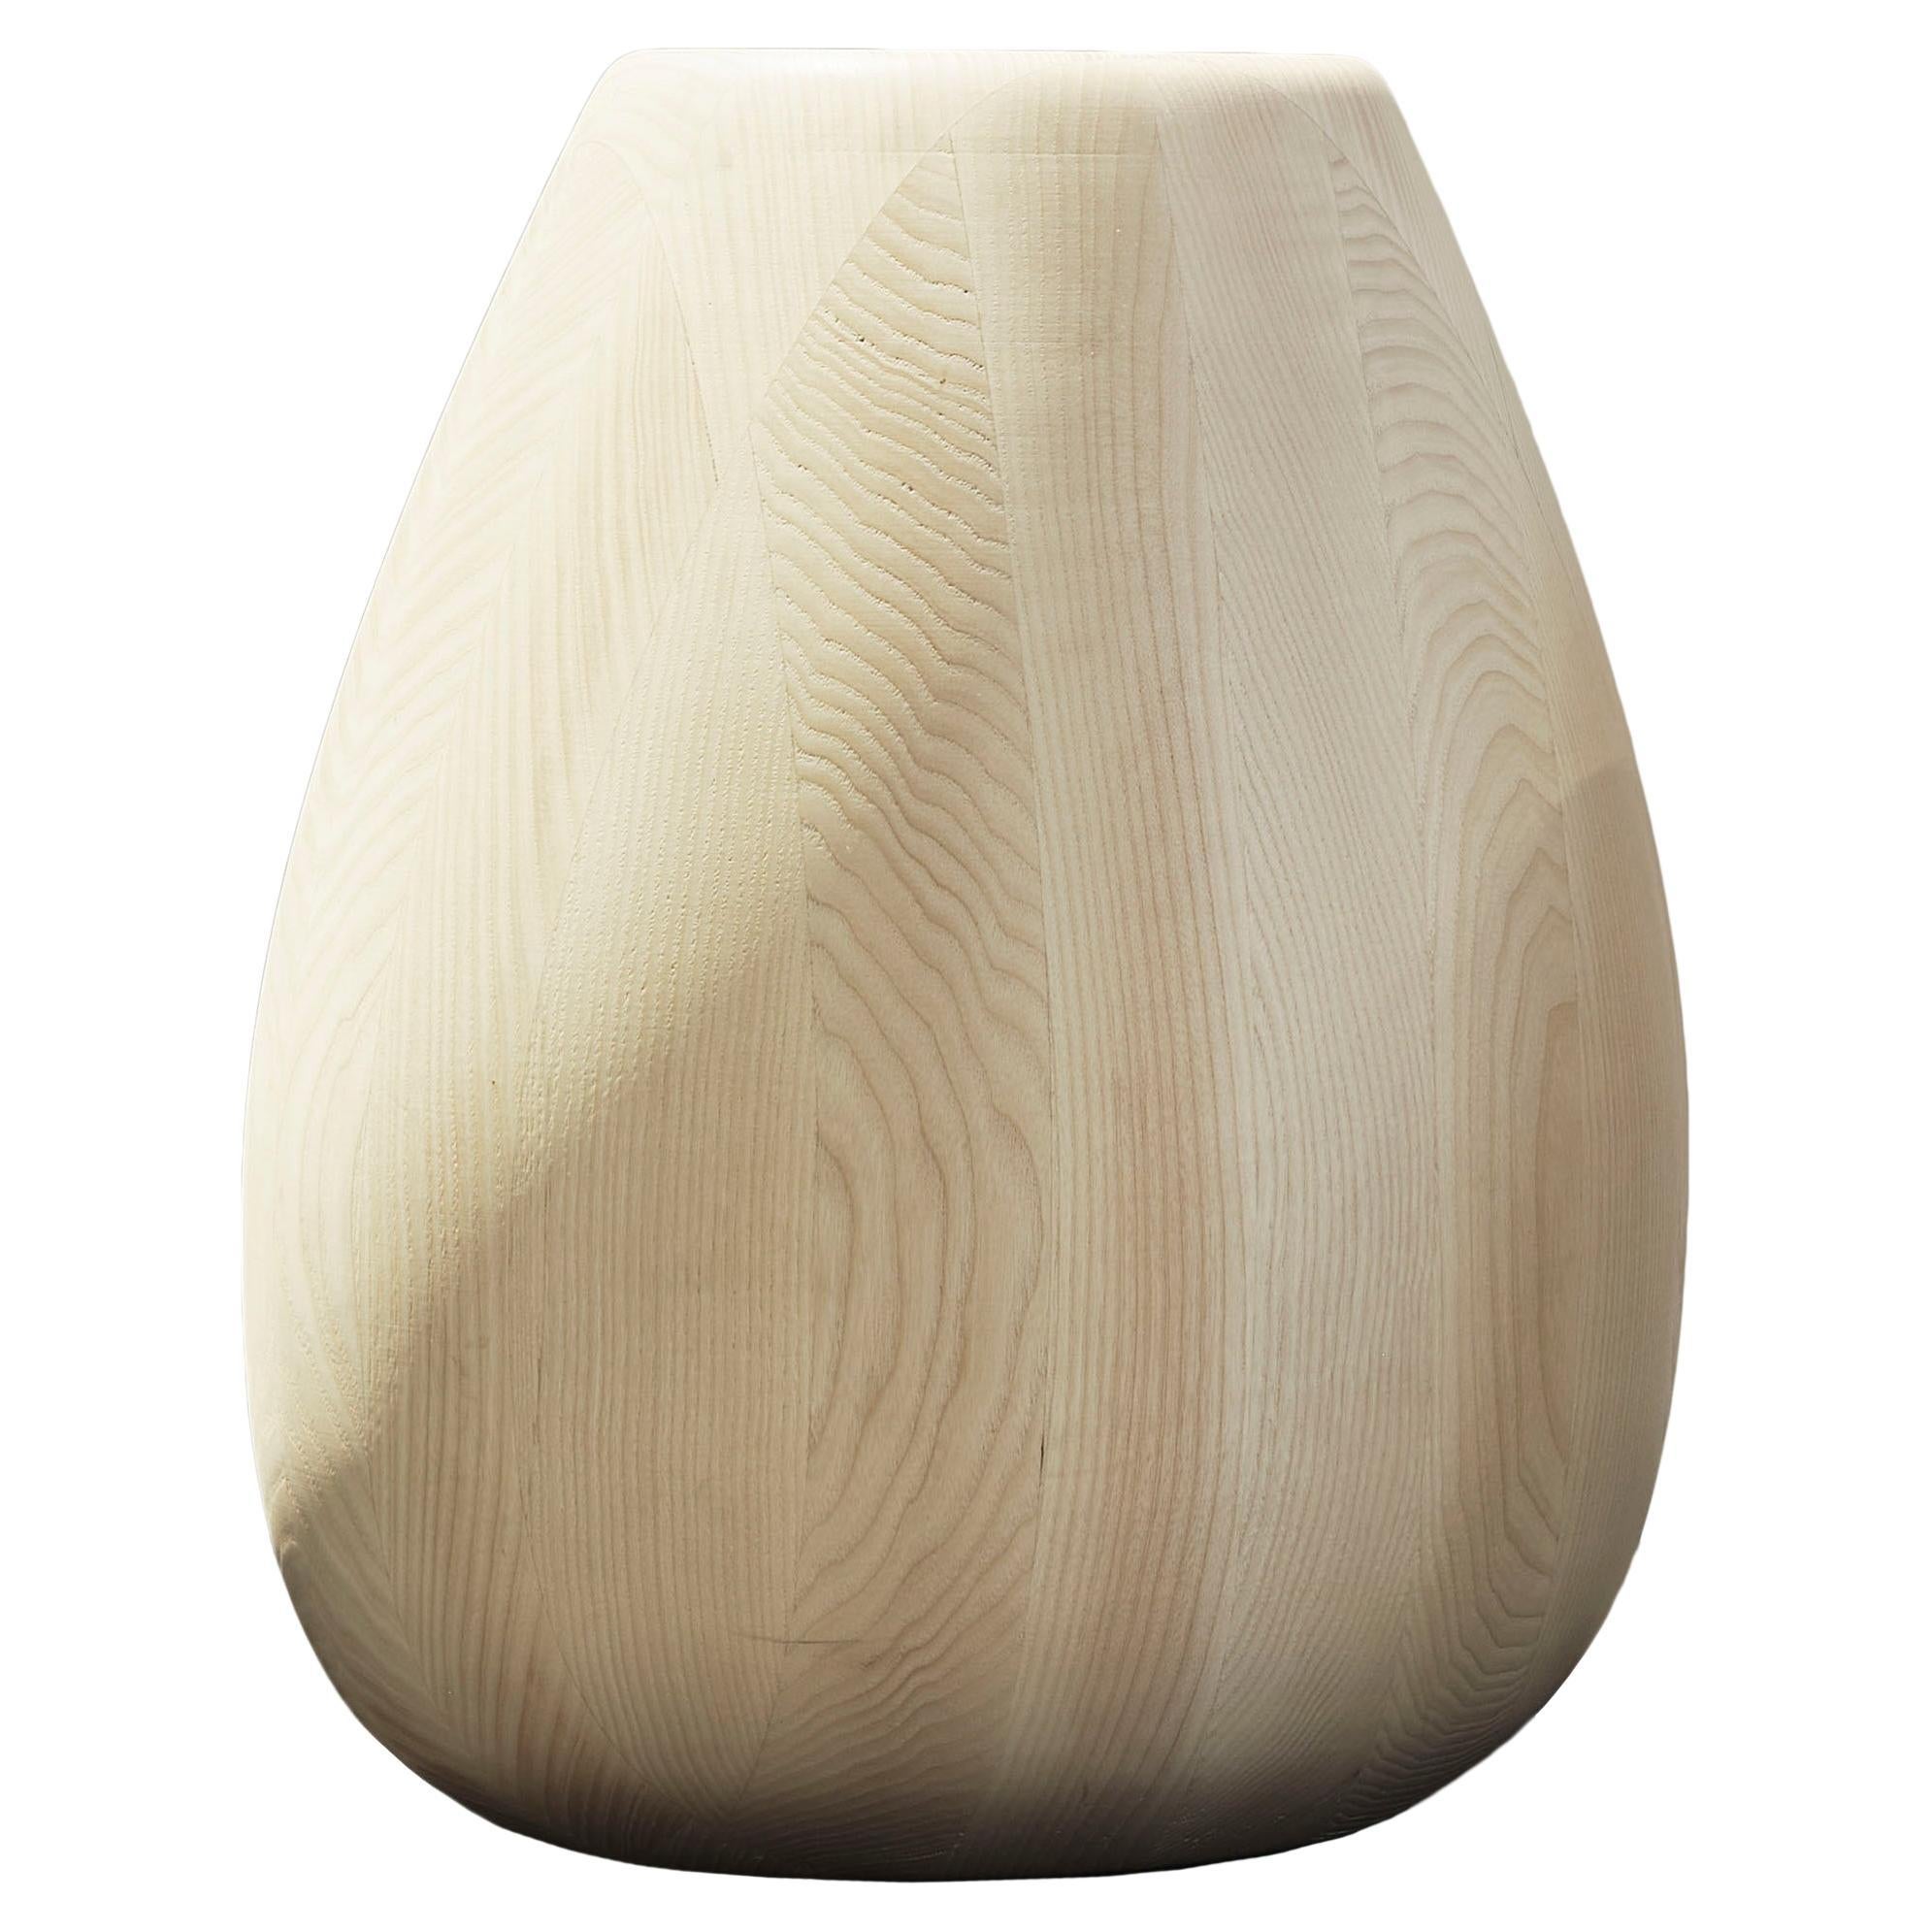 Ash Wood Vase h25 design Franco Albini - edit by Officina della Scala For Sale